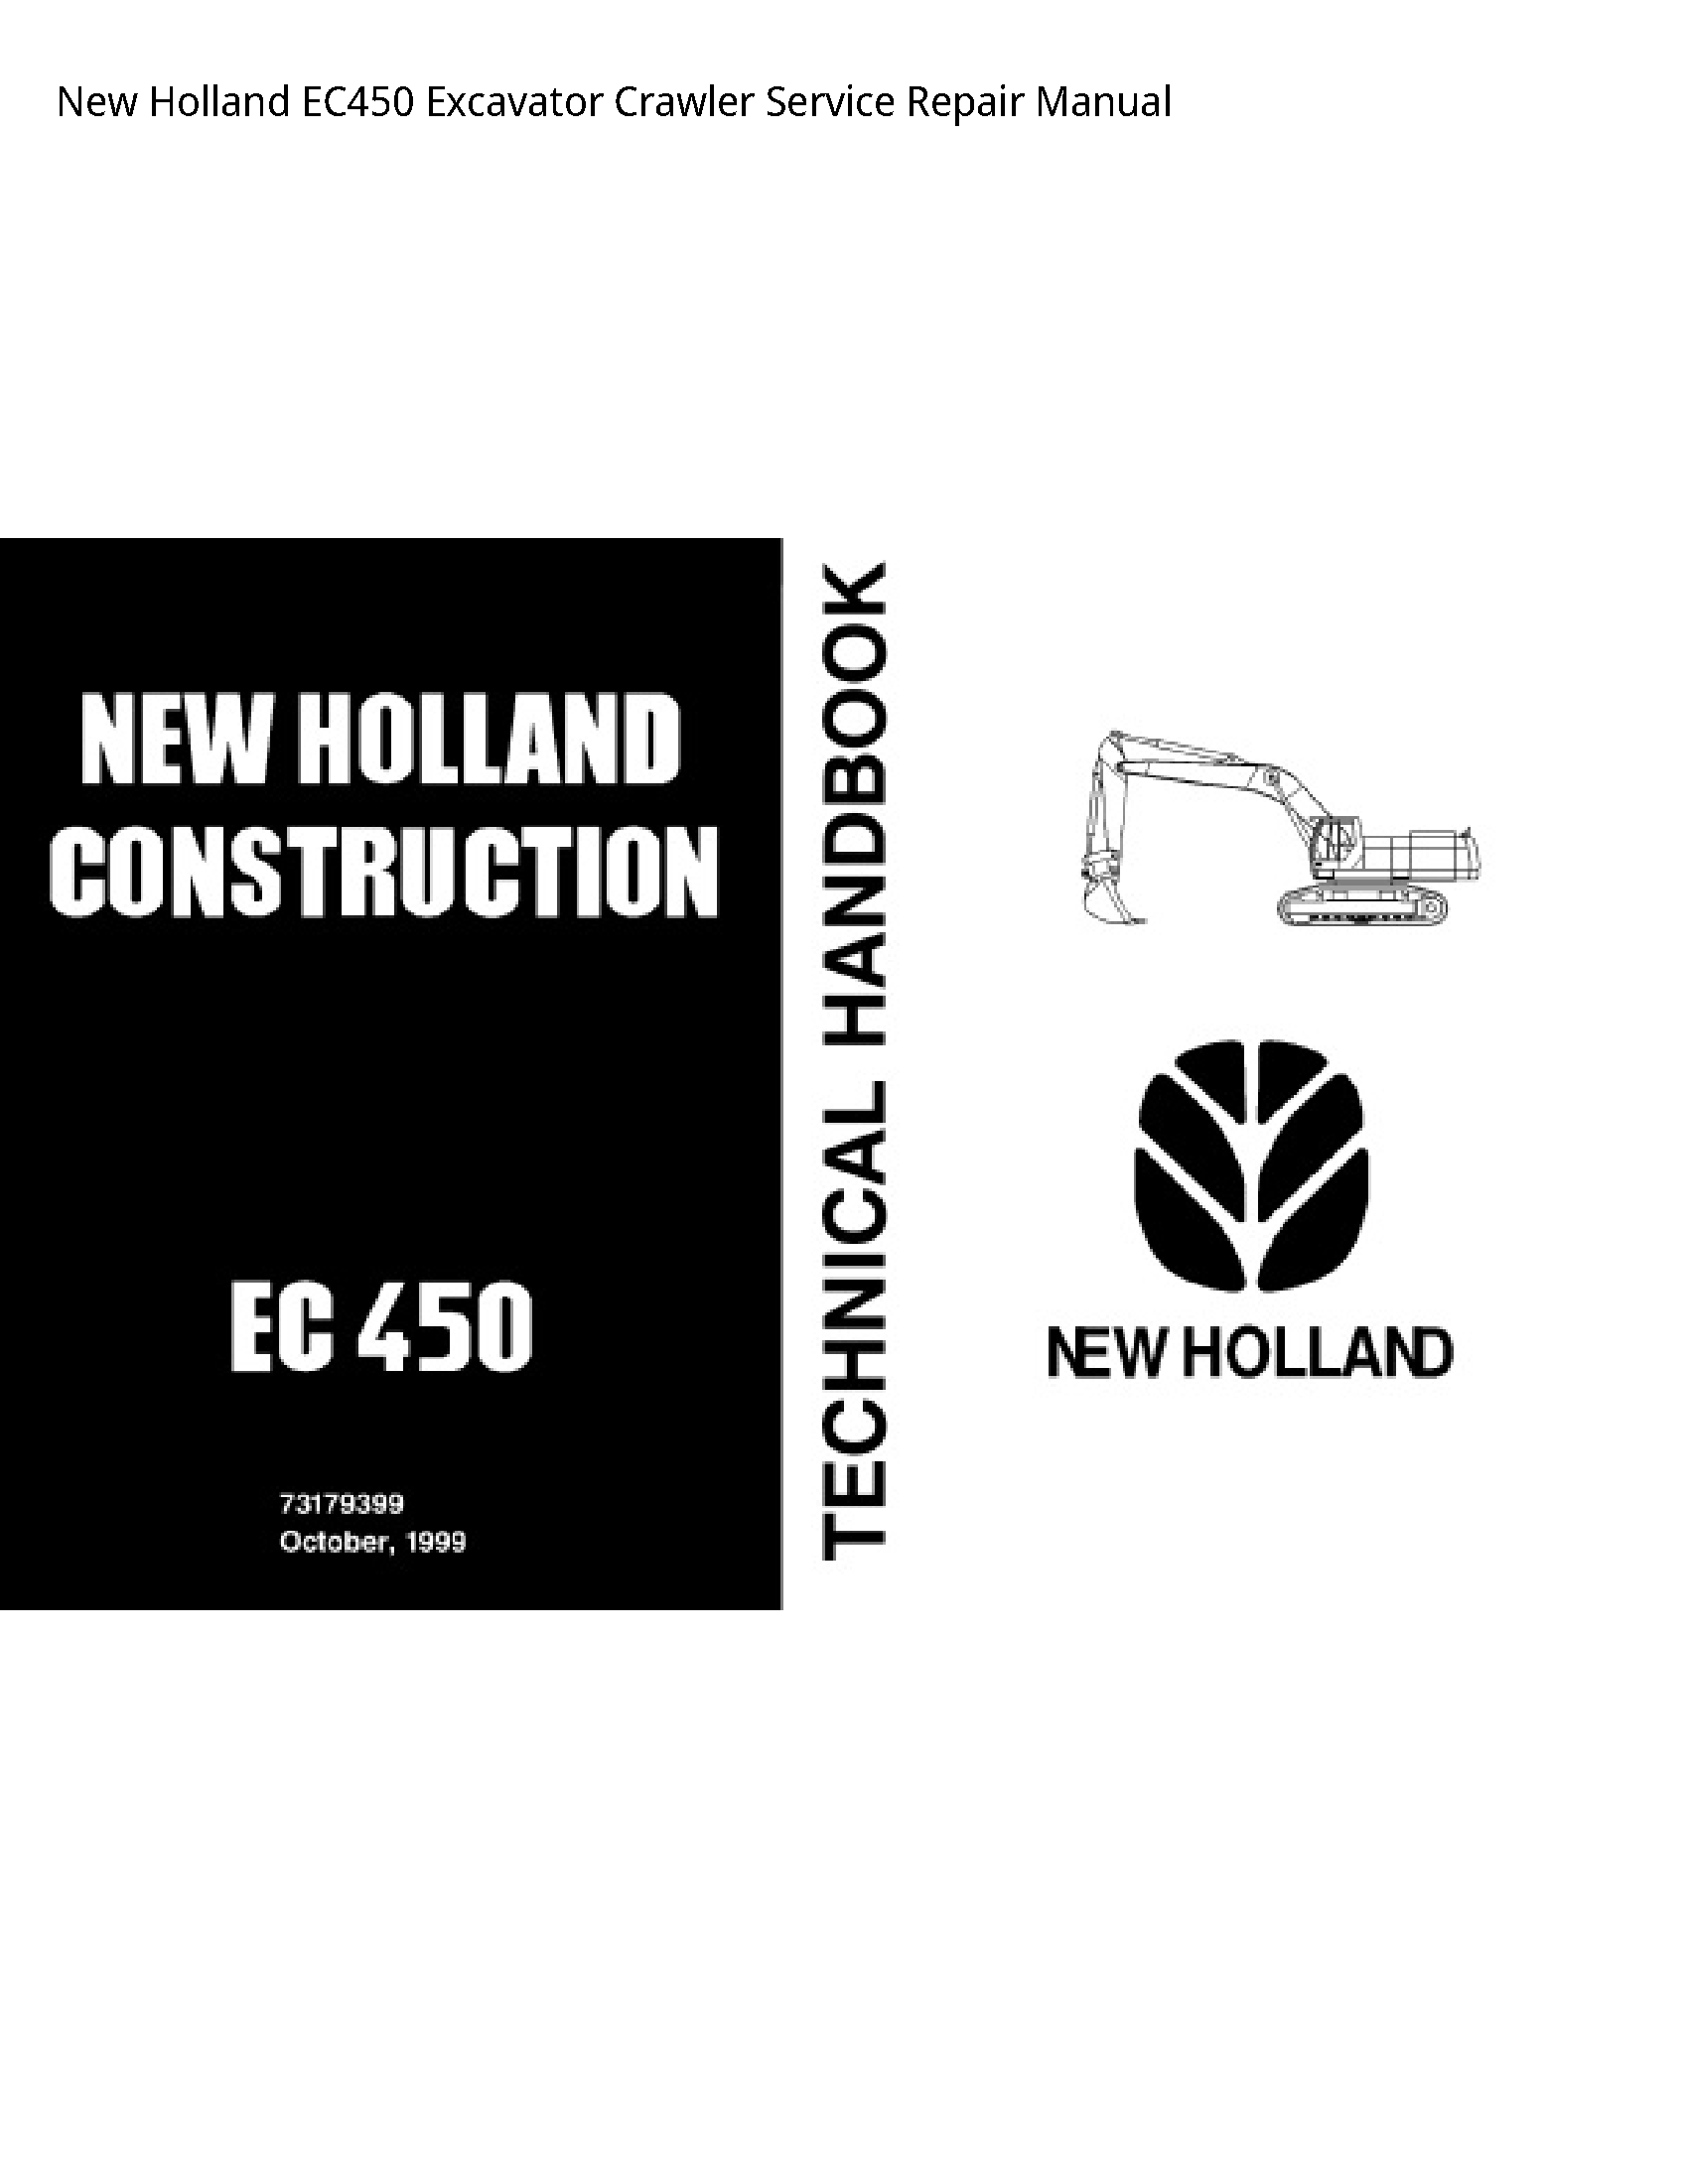 New Holland EC450 Excavator Crawler manual